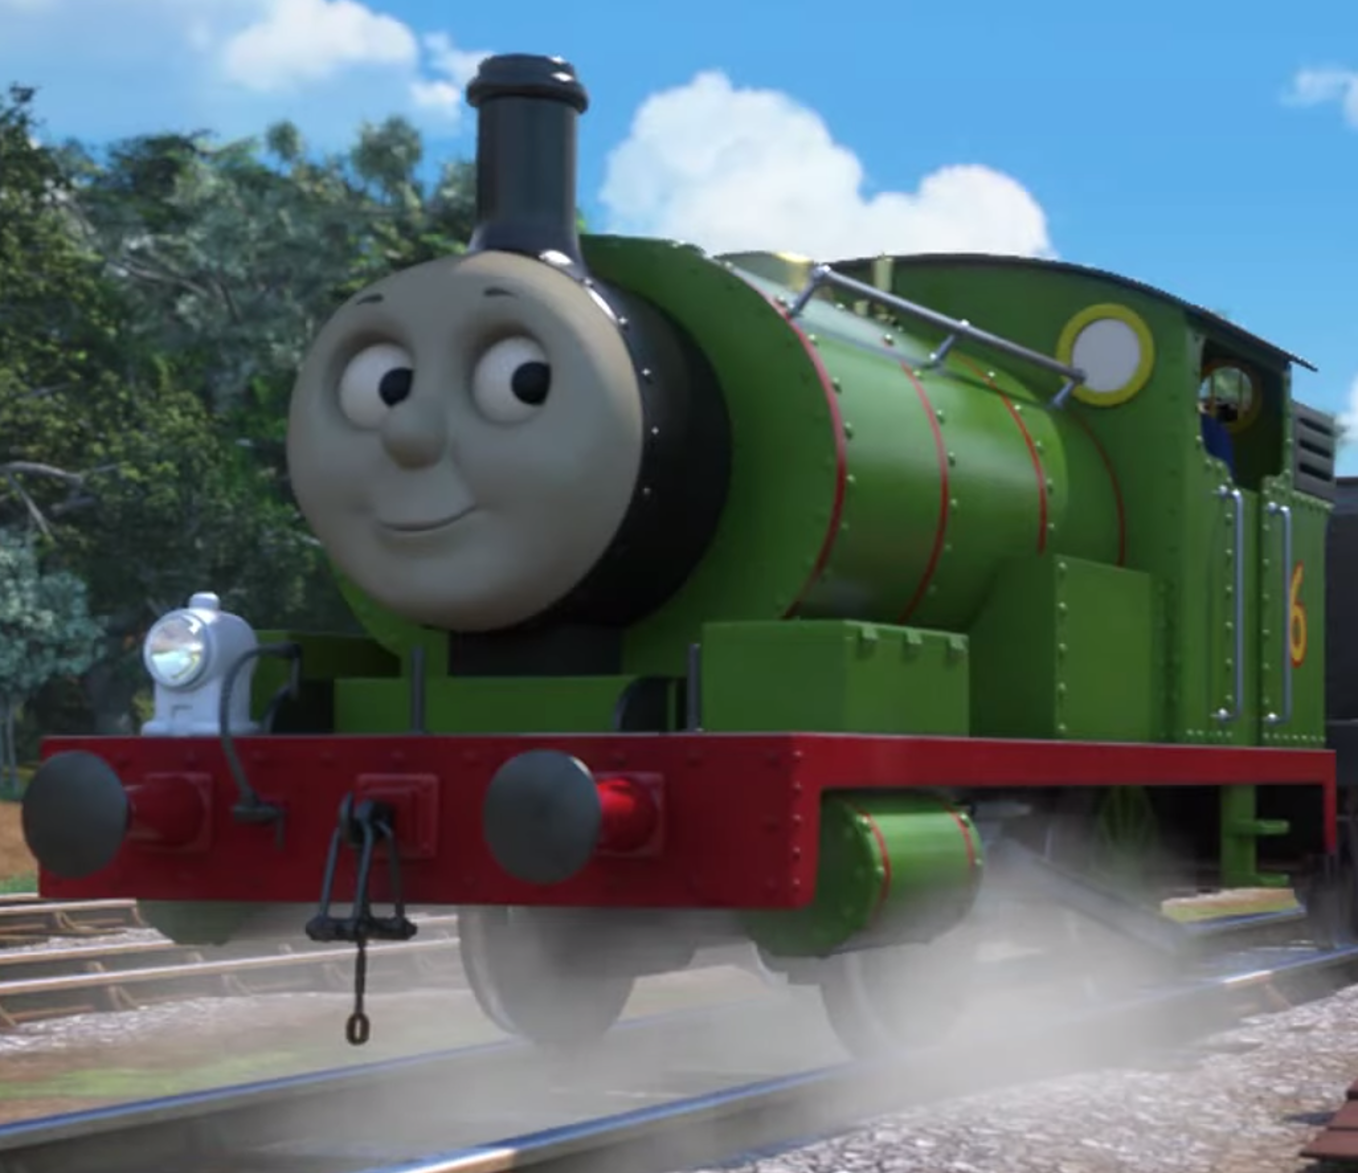 green train in thomas the tank engine